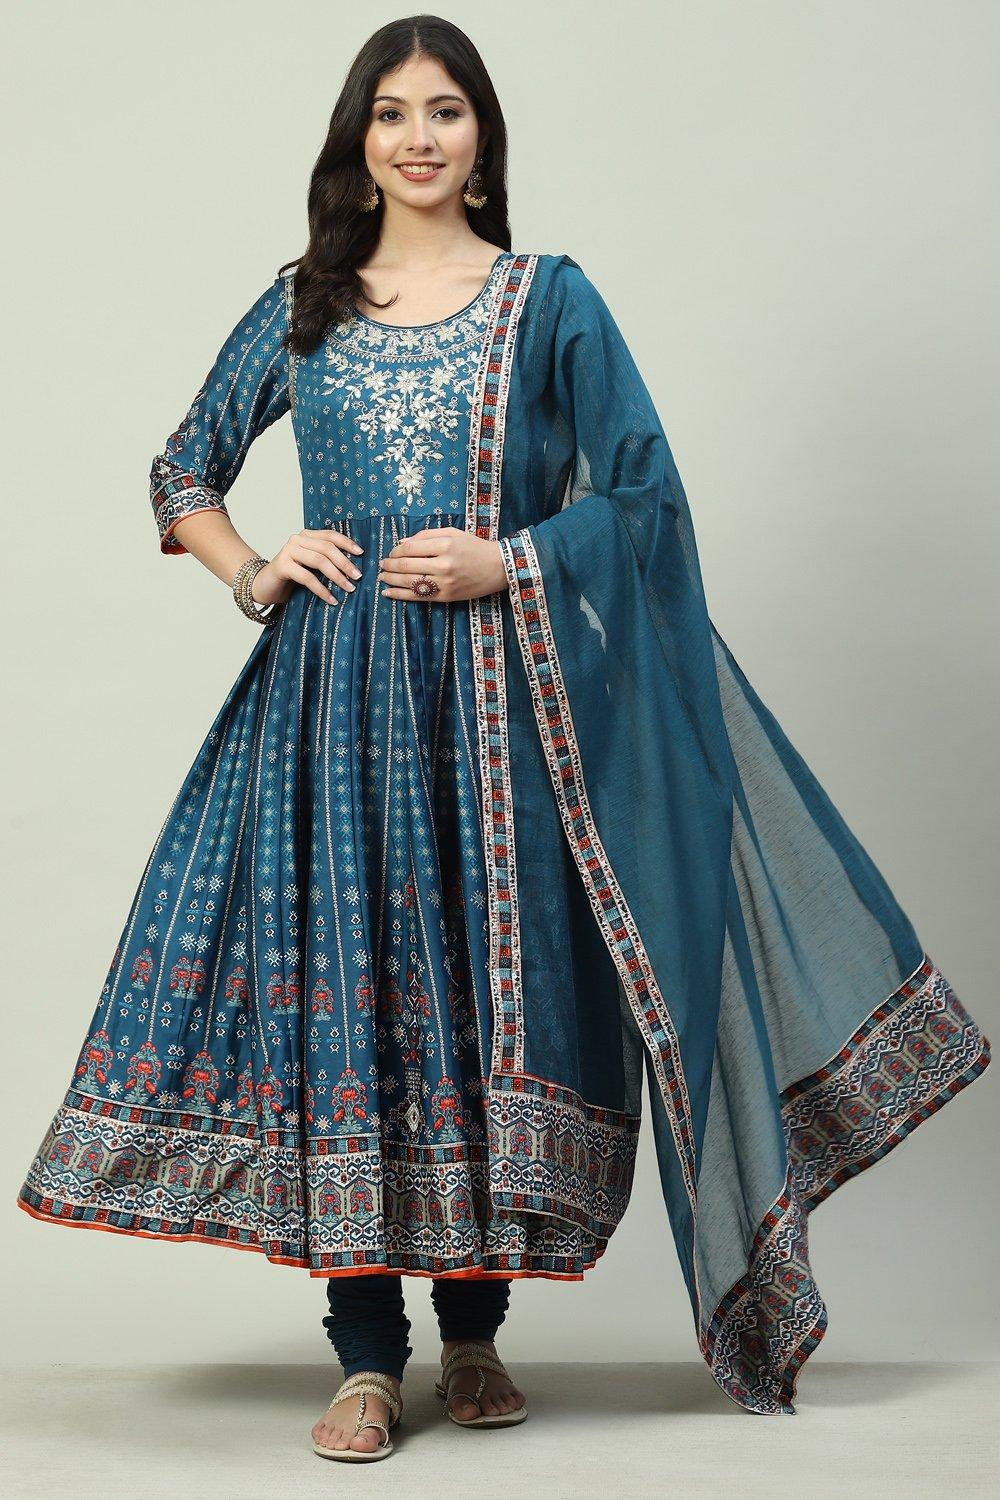 Buy online Teal Cotton Anarkali Suit Set for women at best price ...